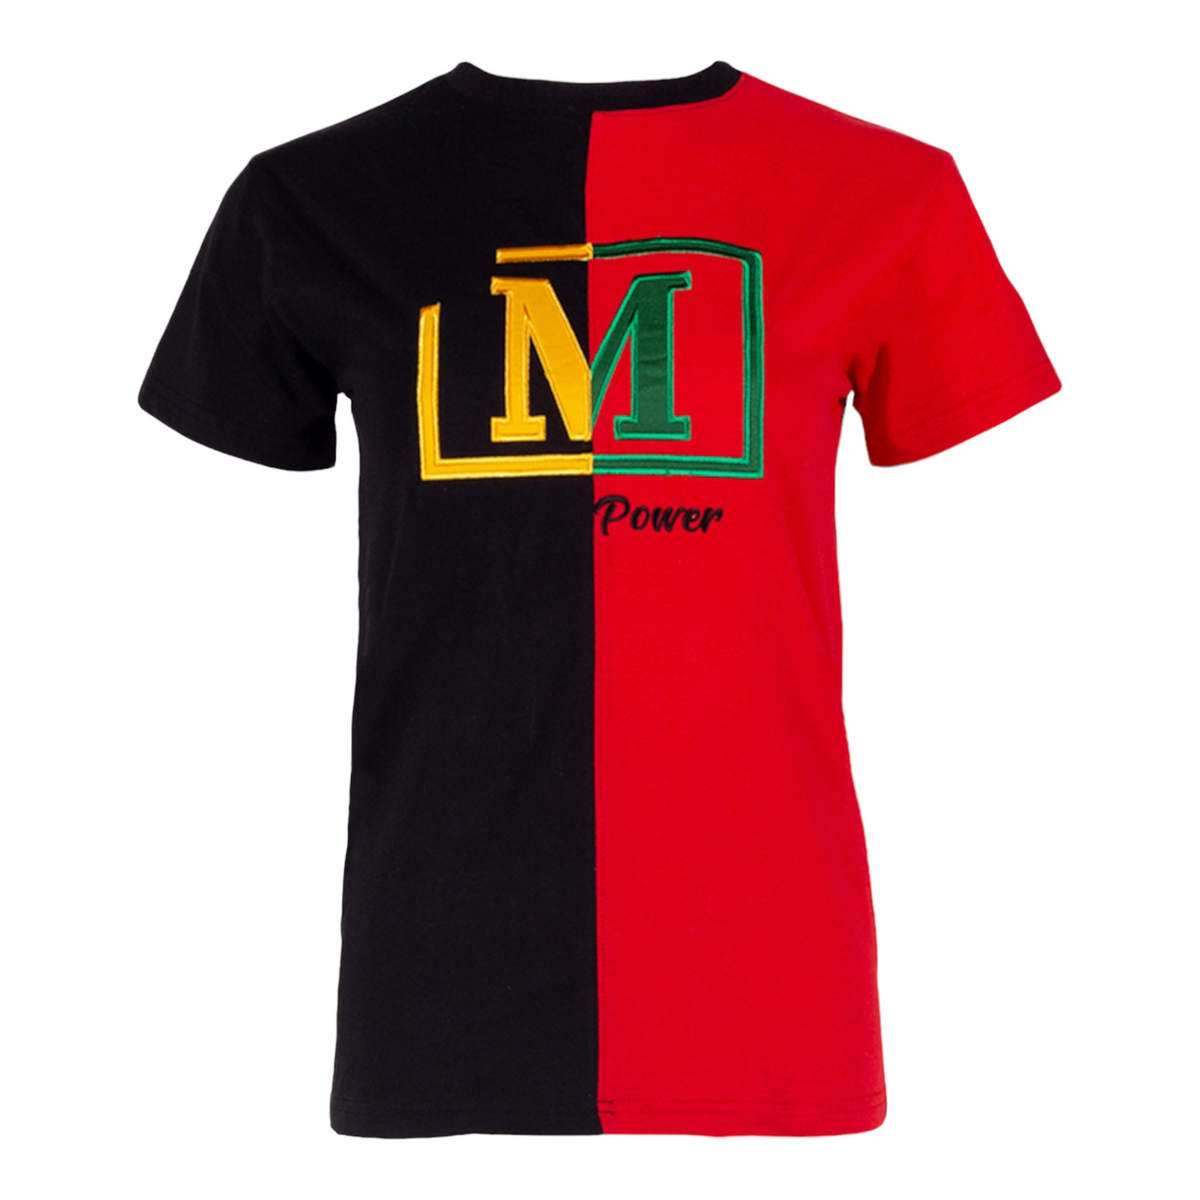 MDB Brand Black History Women's T-Shirt